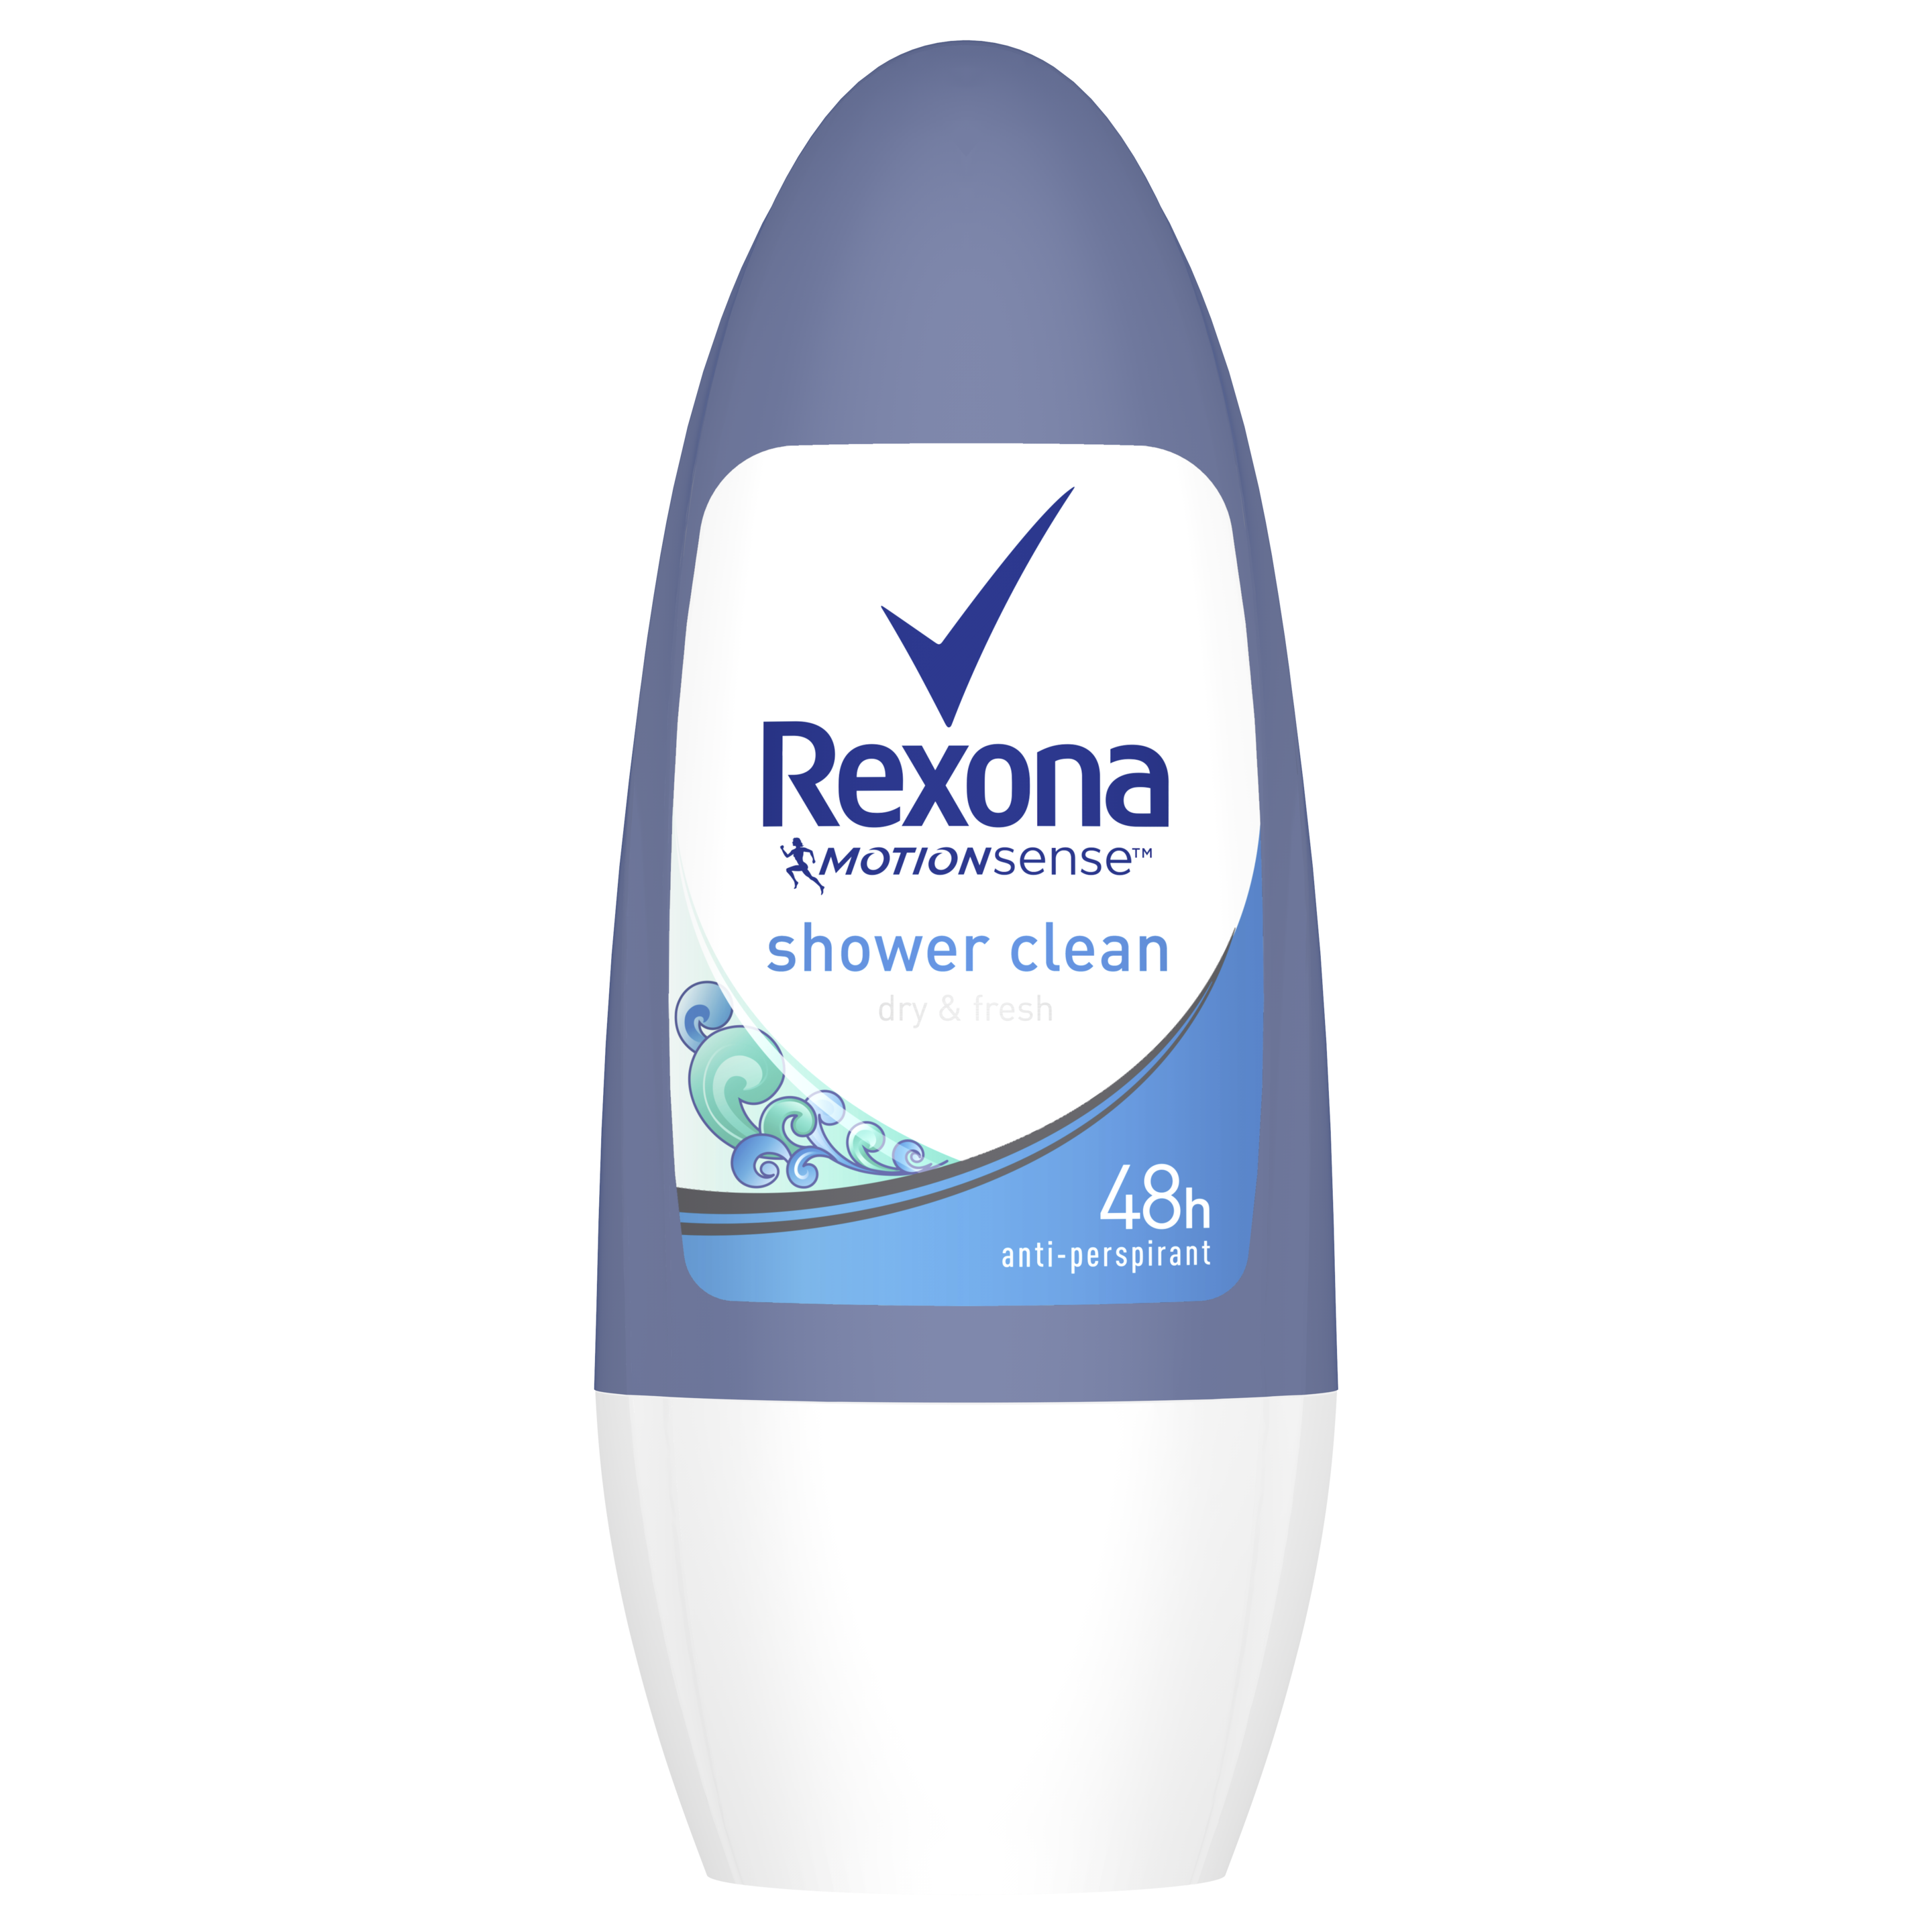 Women Shower clean Antiperspirant MotionSense Deodorant 50ml